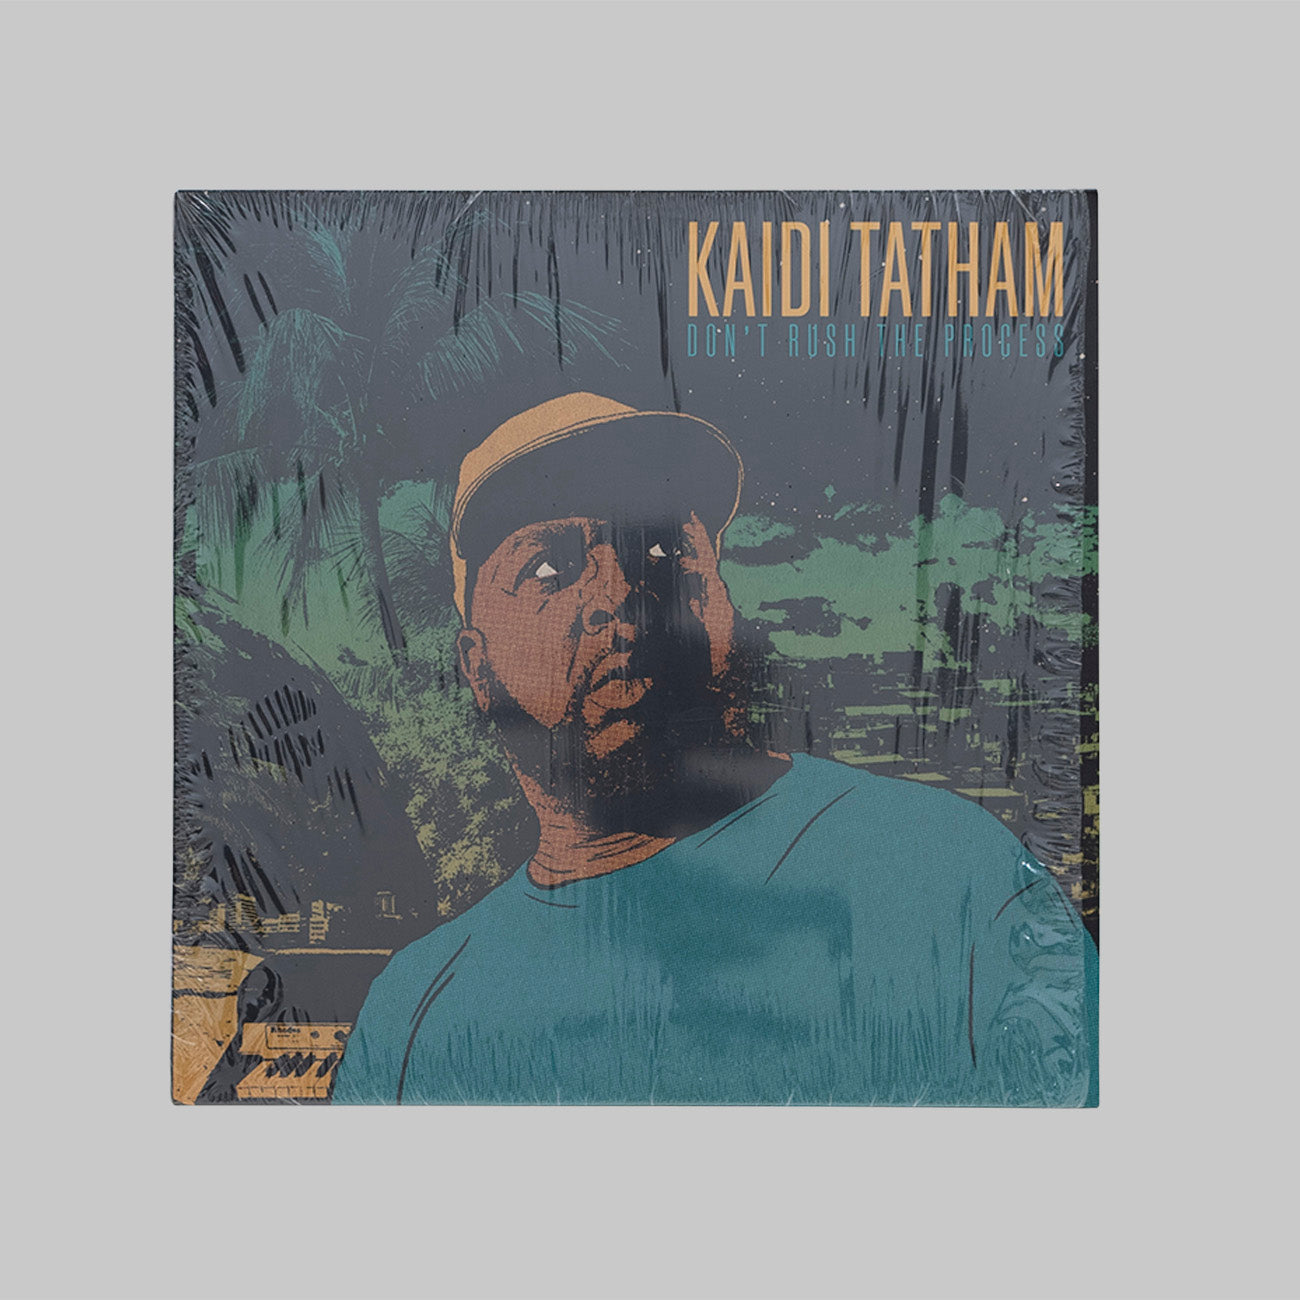 KAIDI TATHAM / DON’T RUSH THE PROCESS